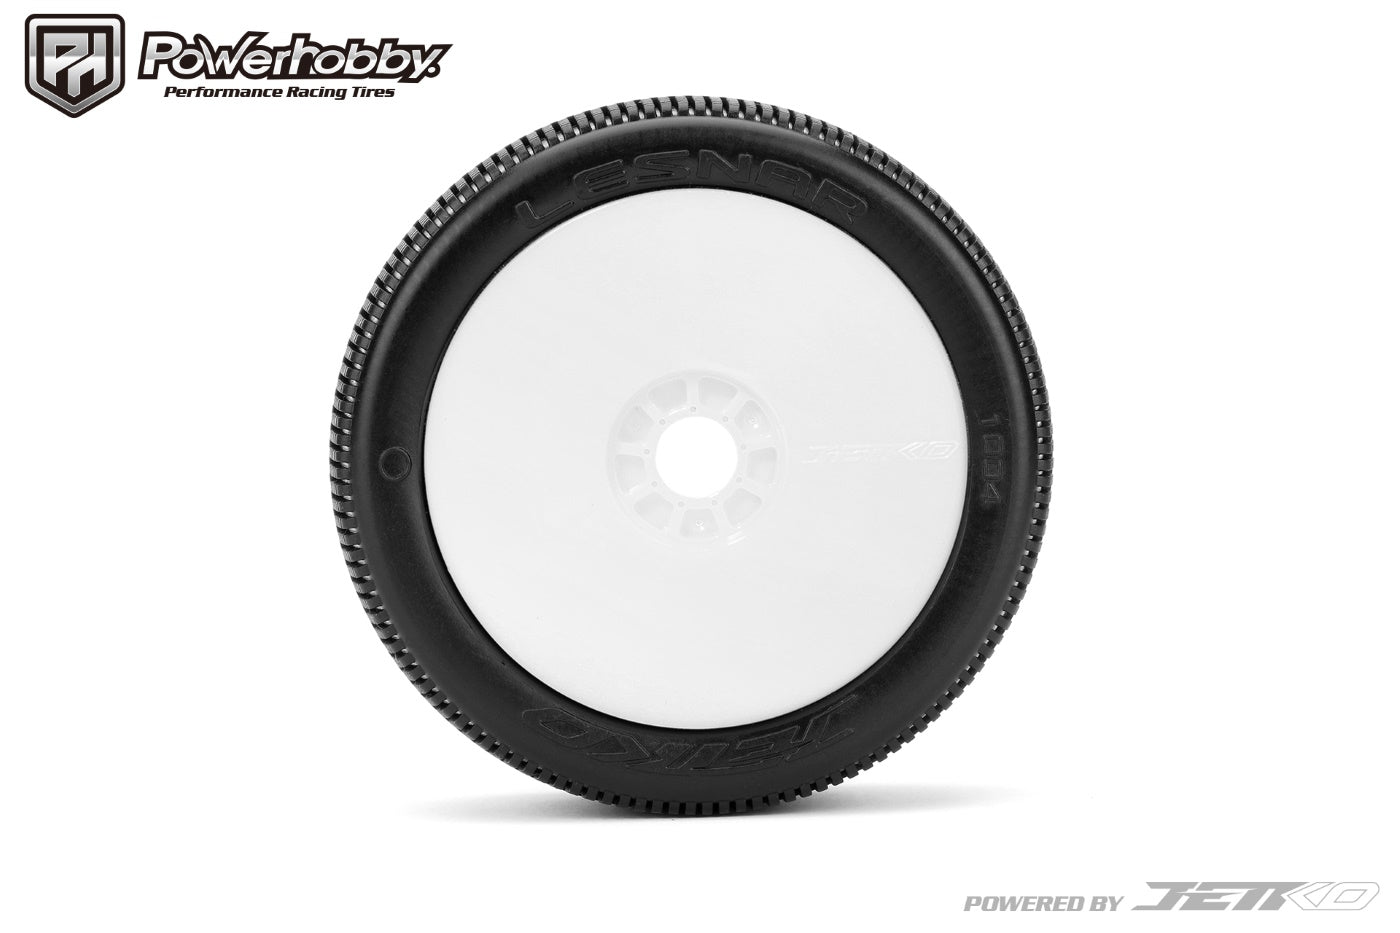 Powerhobby Lesnar 1/8 Buggy Mounted Tires White Dish Wheels (2) Super Soft - PowerHobby